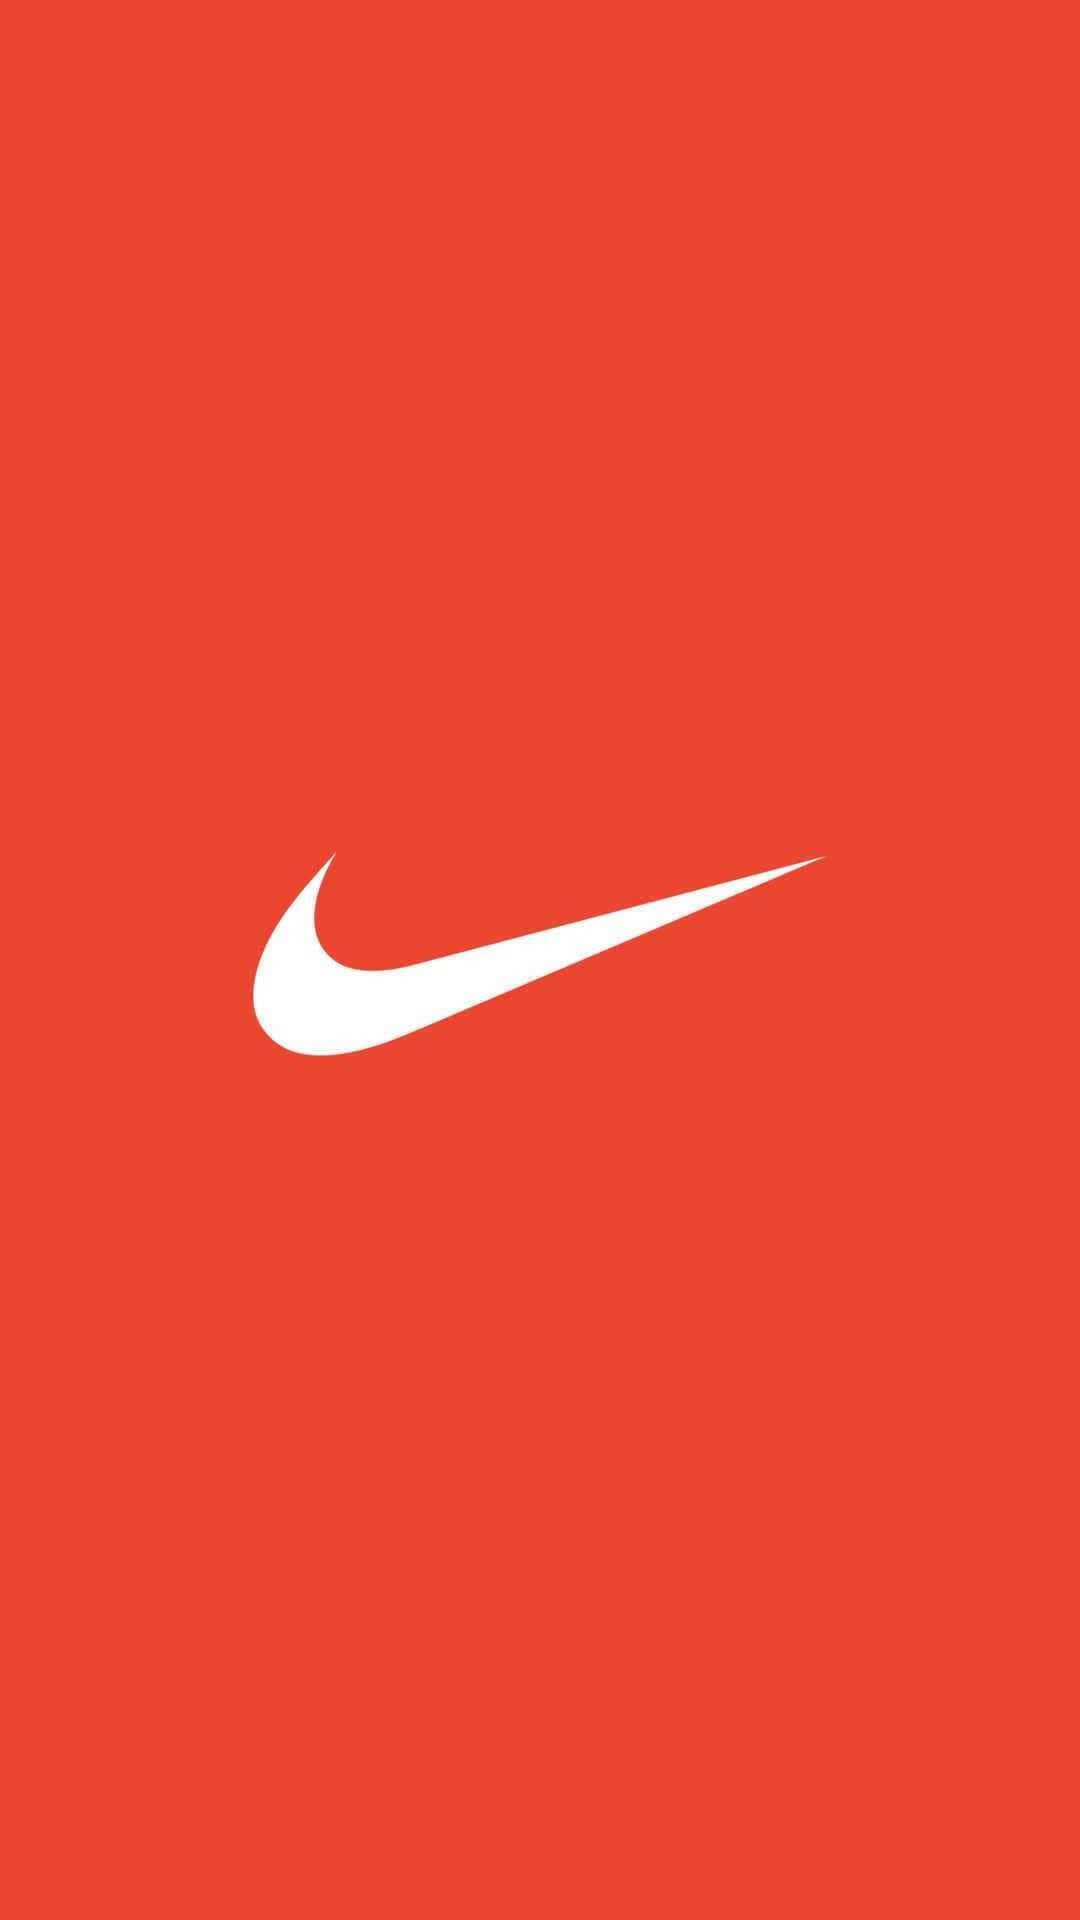 Nike Logo On An Orange Background Wallpaper